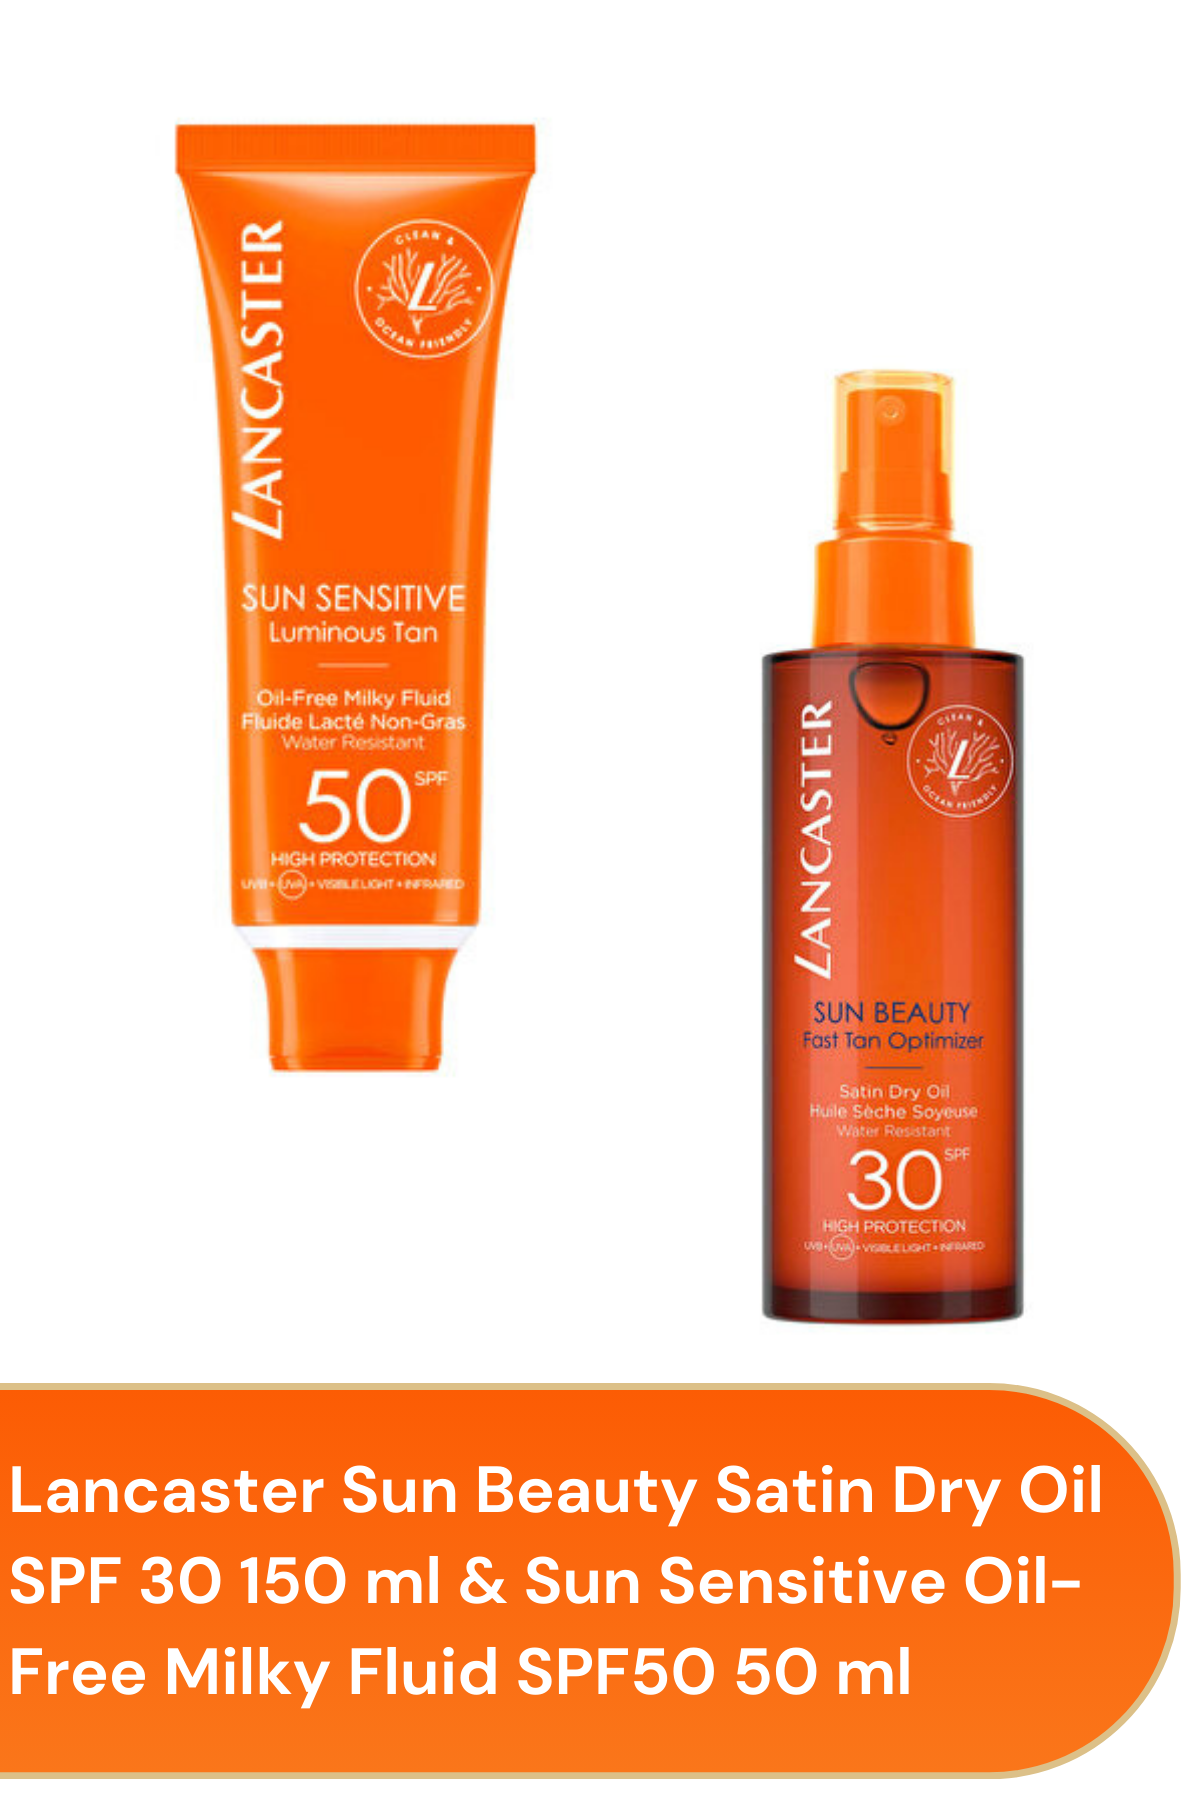 Lancaster Sun Beauty Satin Dry Oil SPF 30 150 ml & Sun Sensitive Oil-Free Milky Fluid SPF50 50 ml